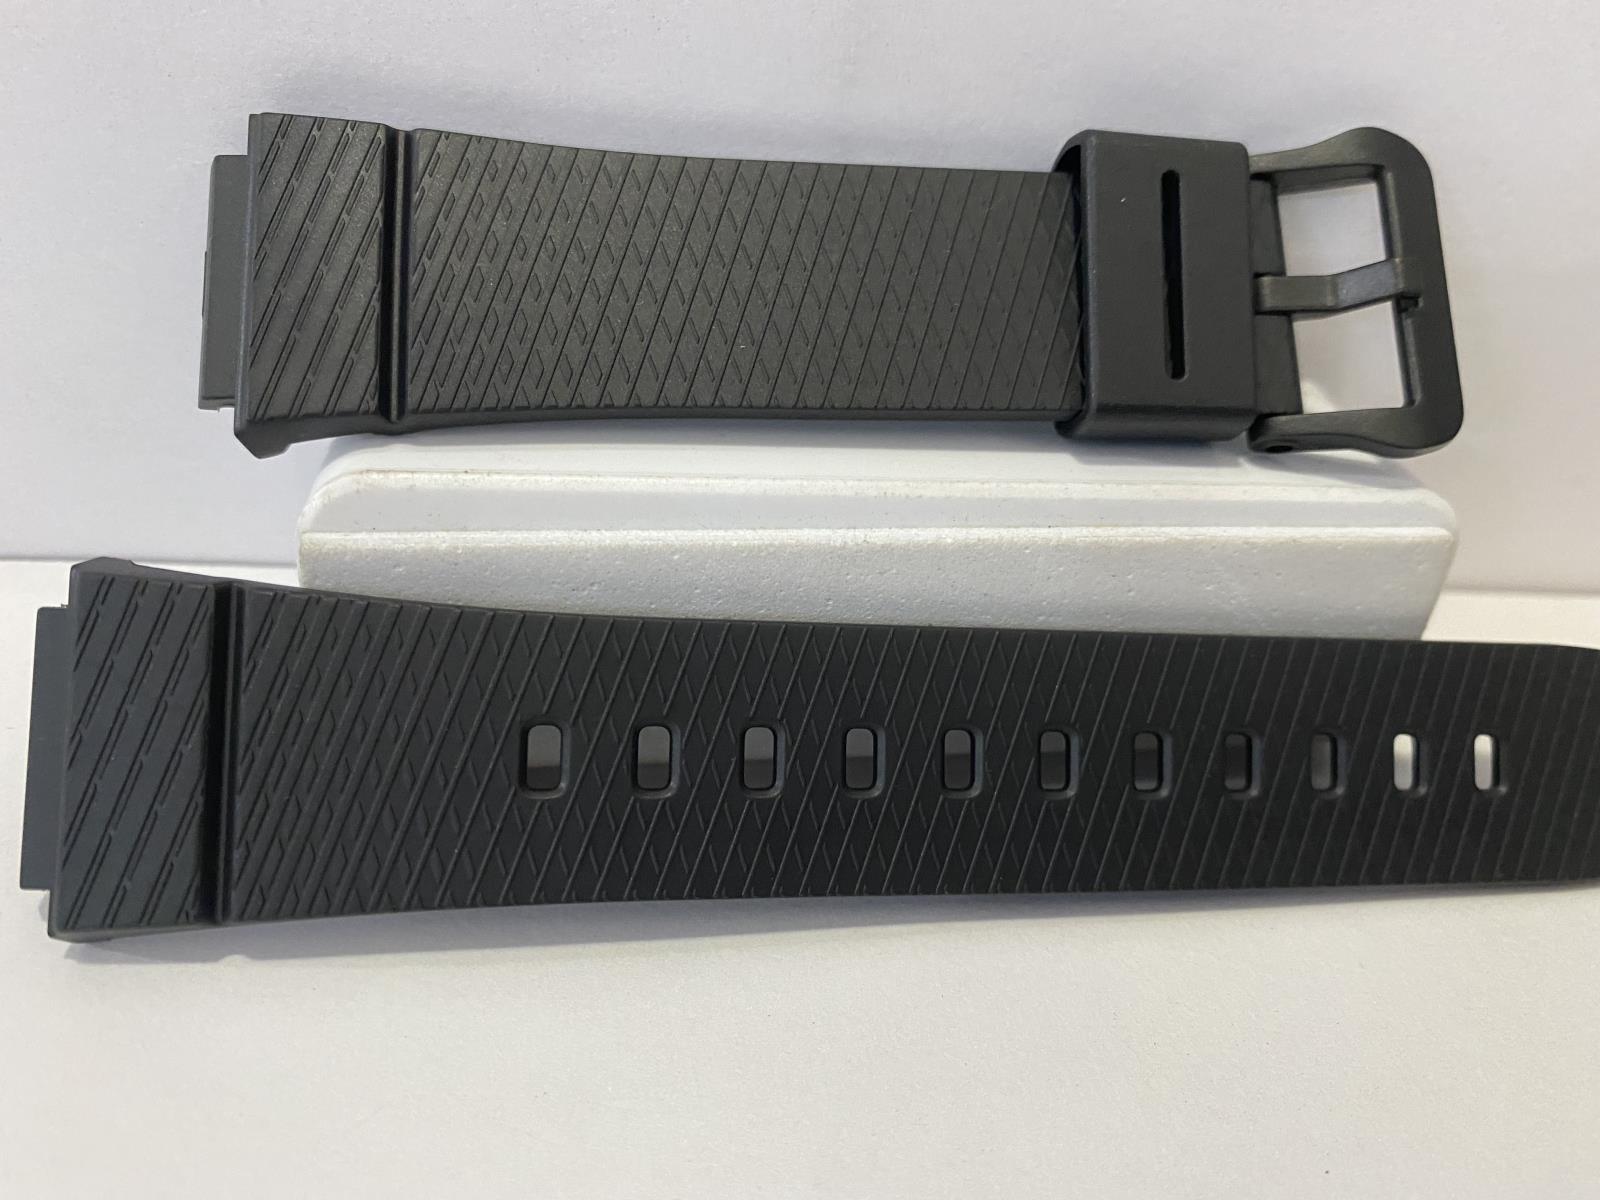 Casio Original Watchband For Model HDC-700. Black Resin Strap.Band